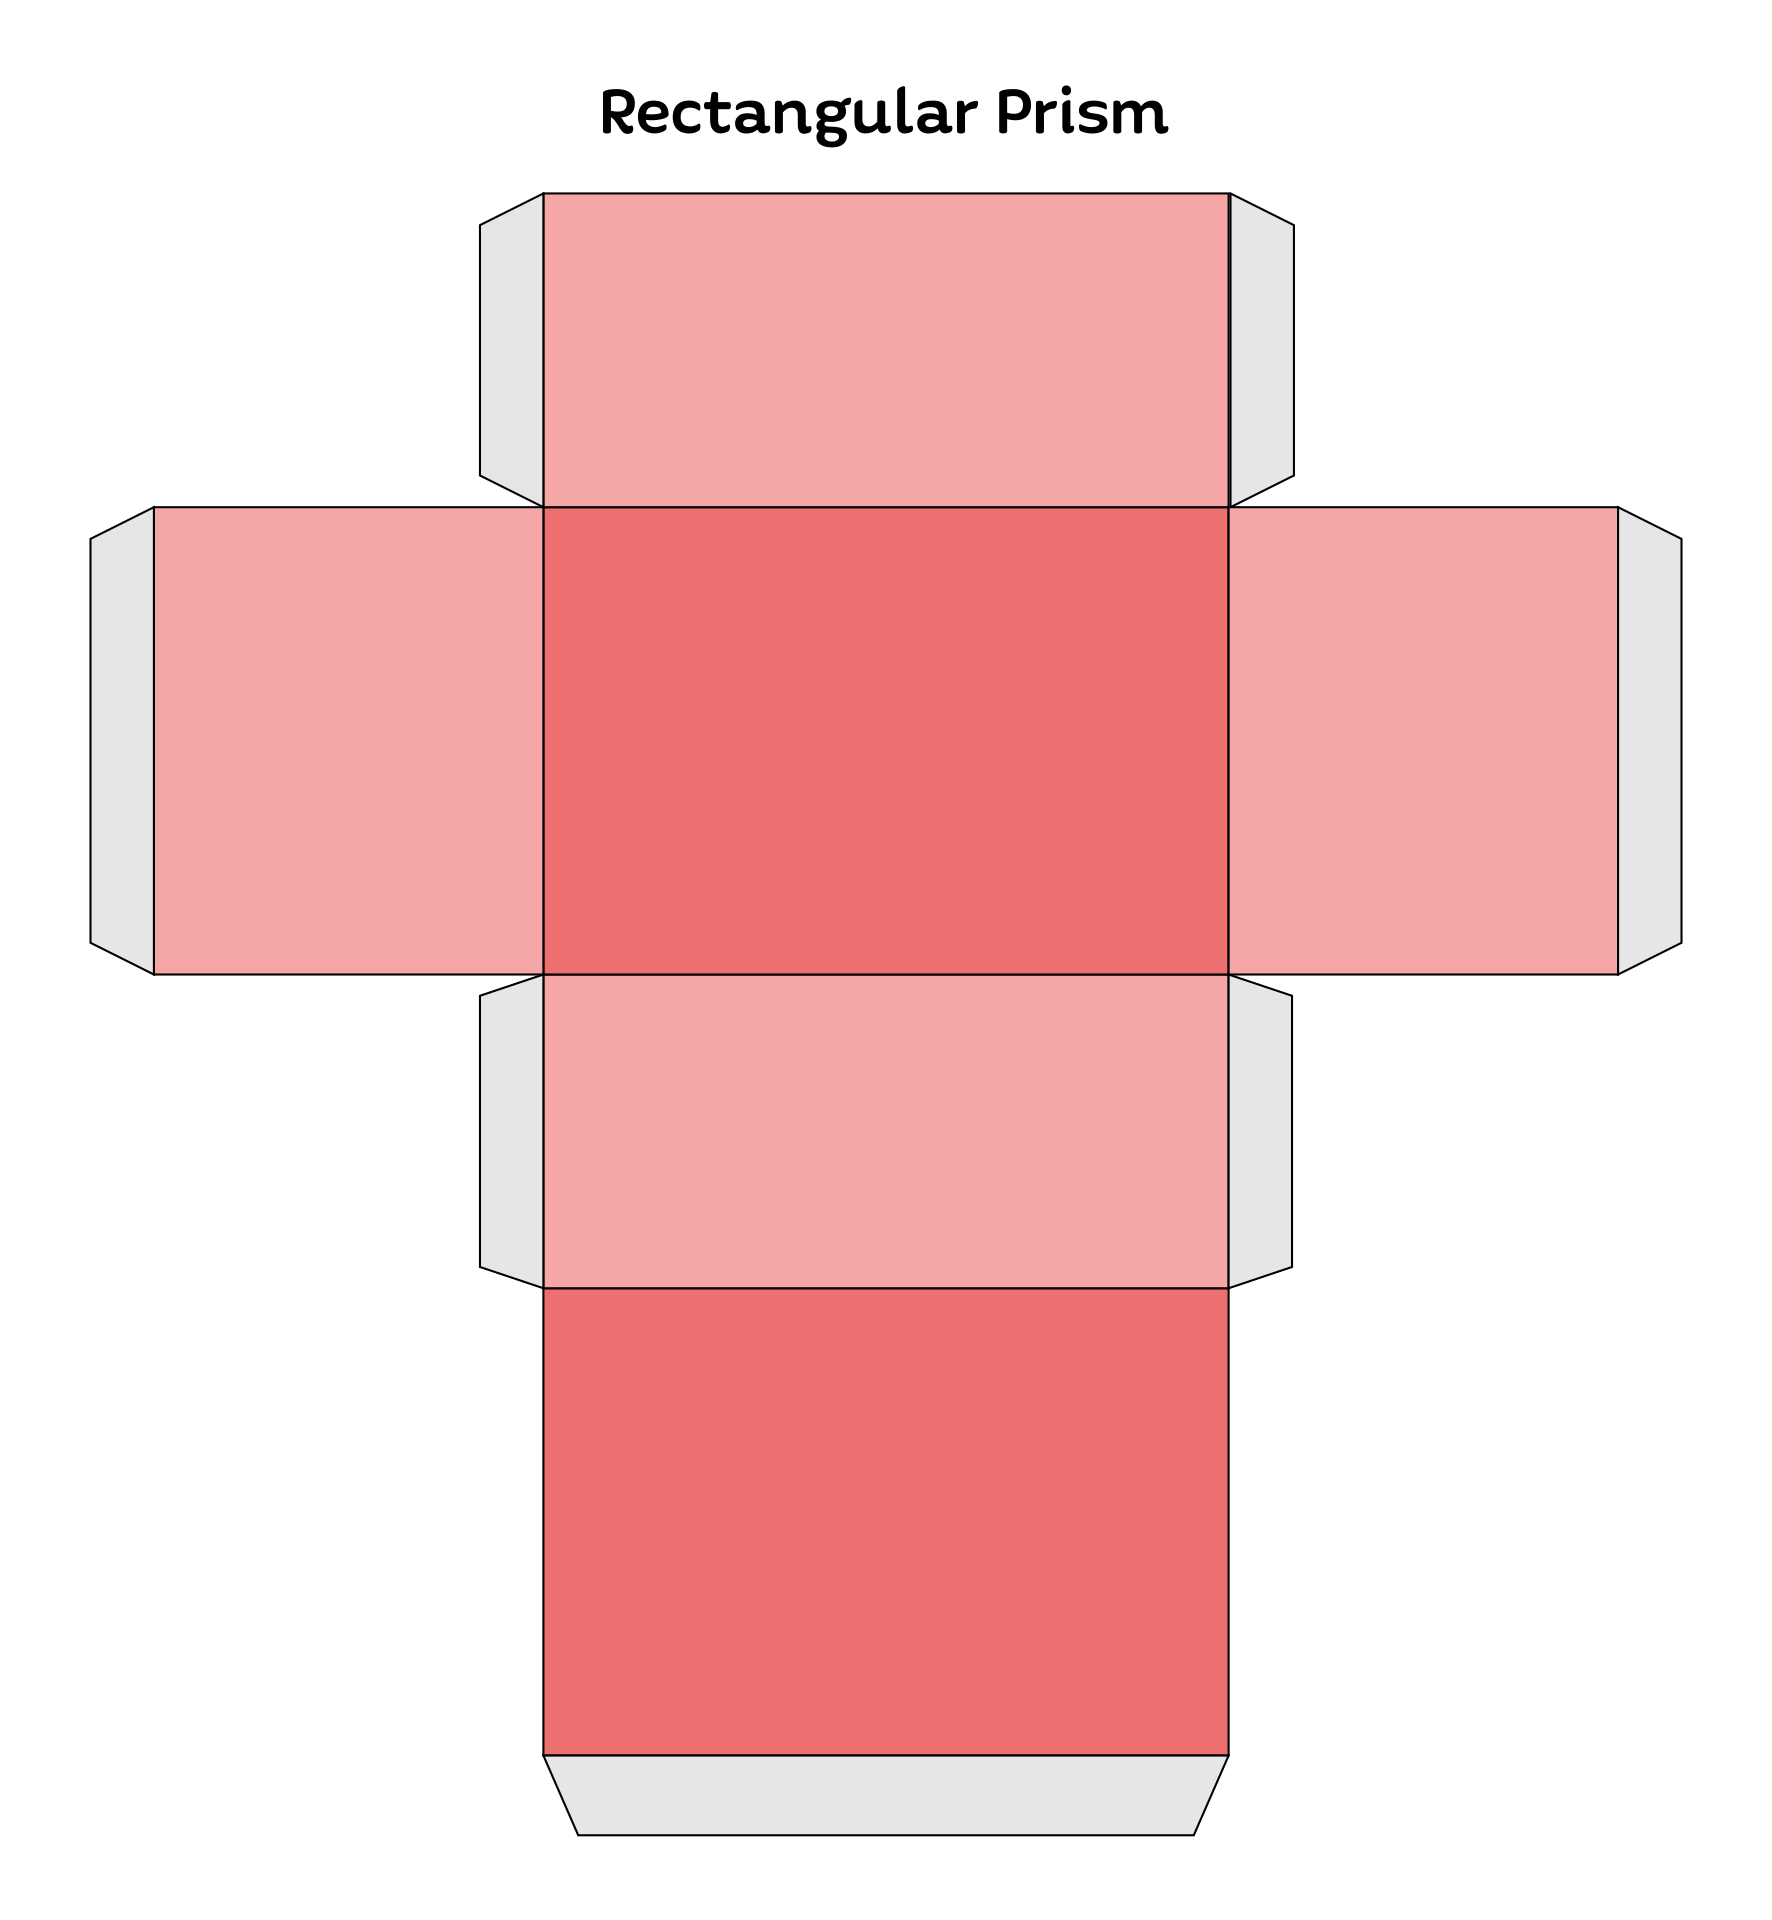 3d rectangle template